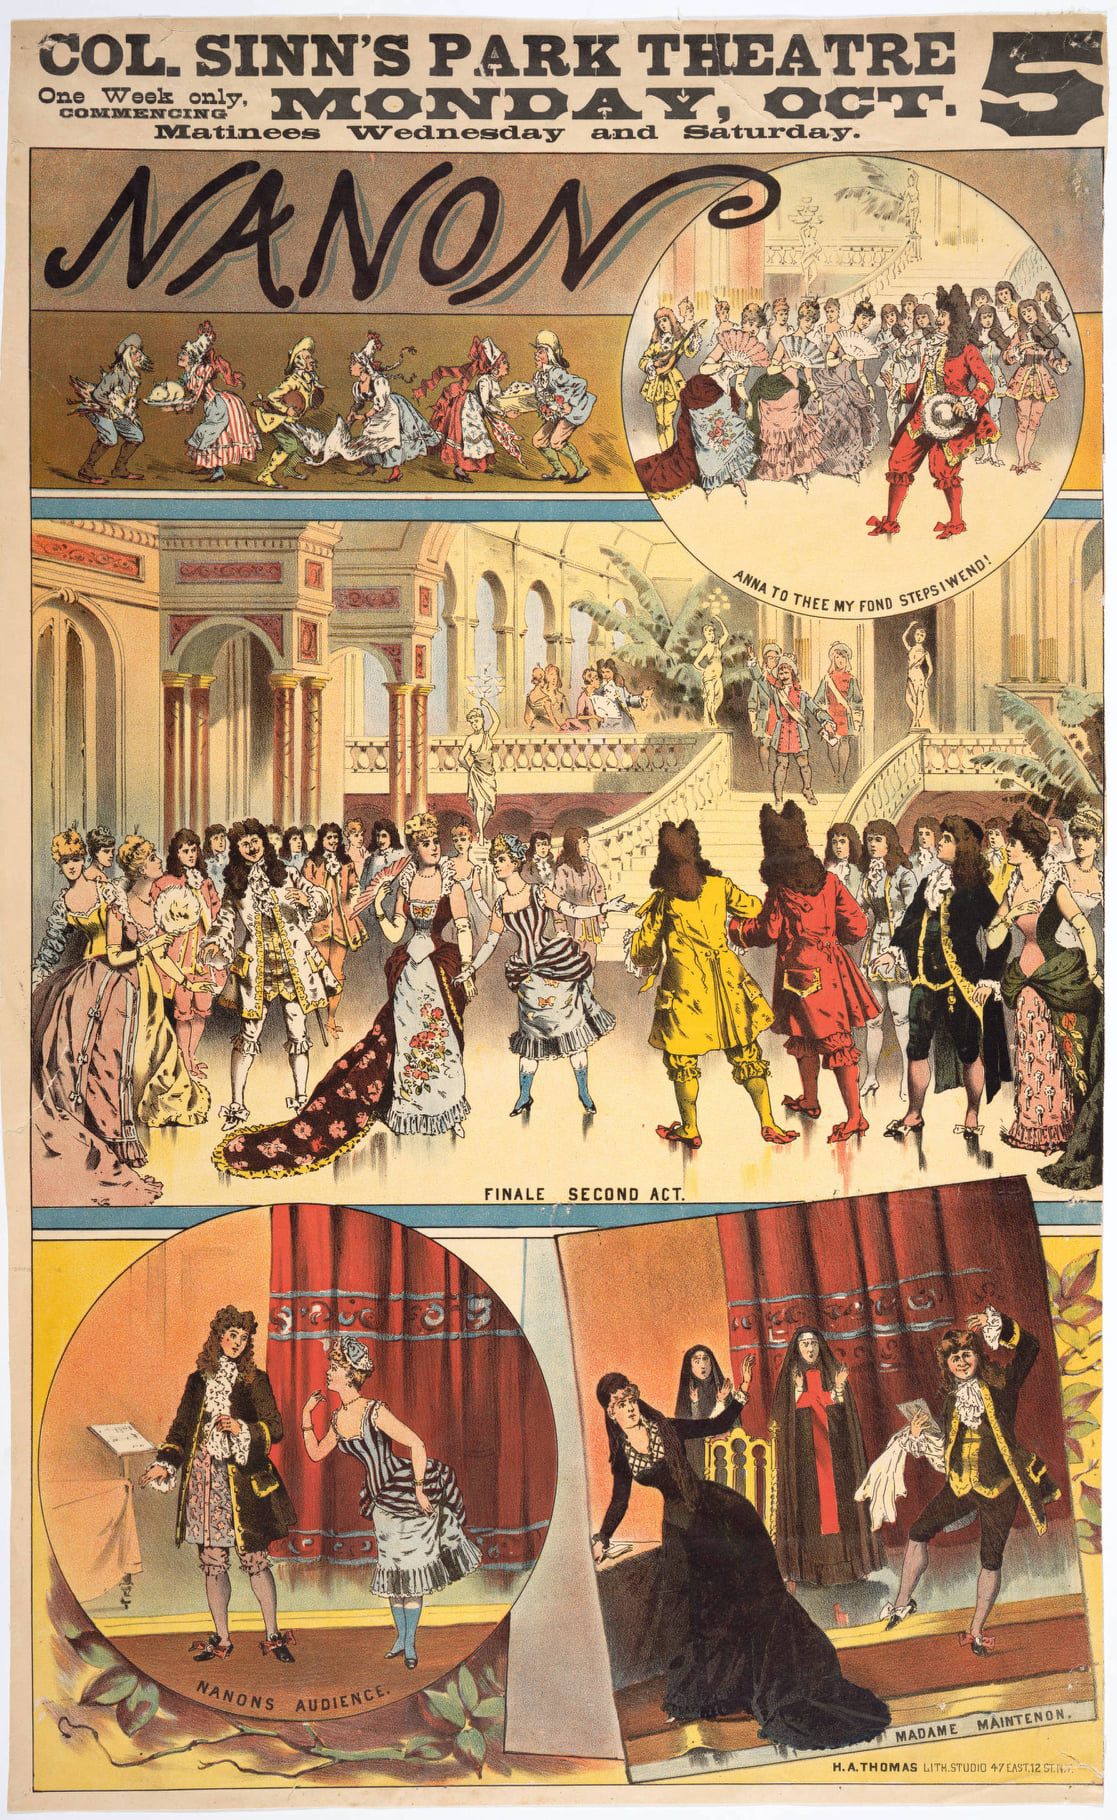 Scenes from Genée's "Nanon" as shown on a US-American advertisement. (Photo: Dario Salvi Archive)